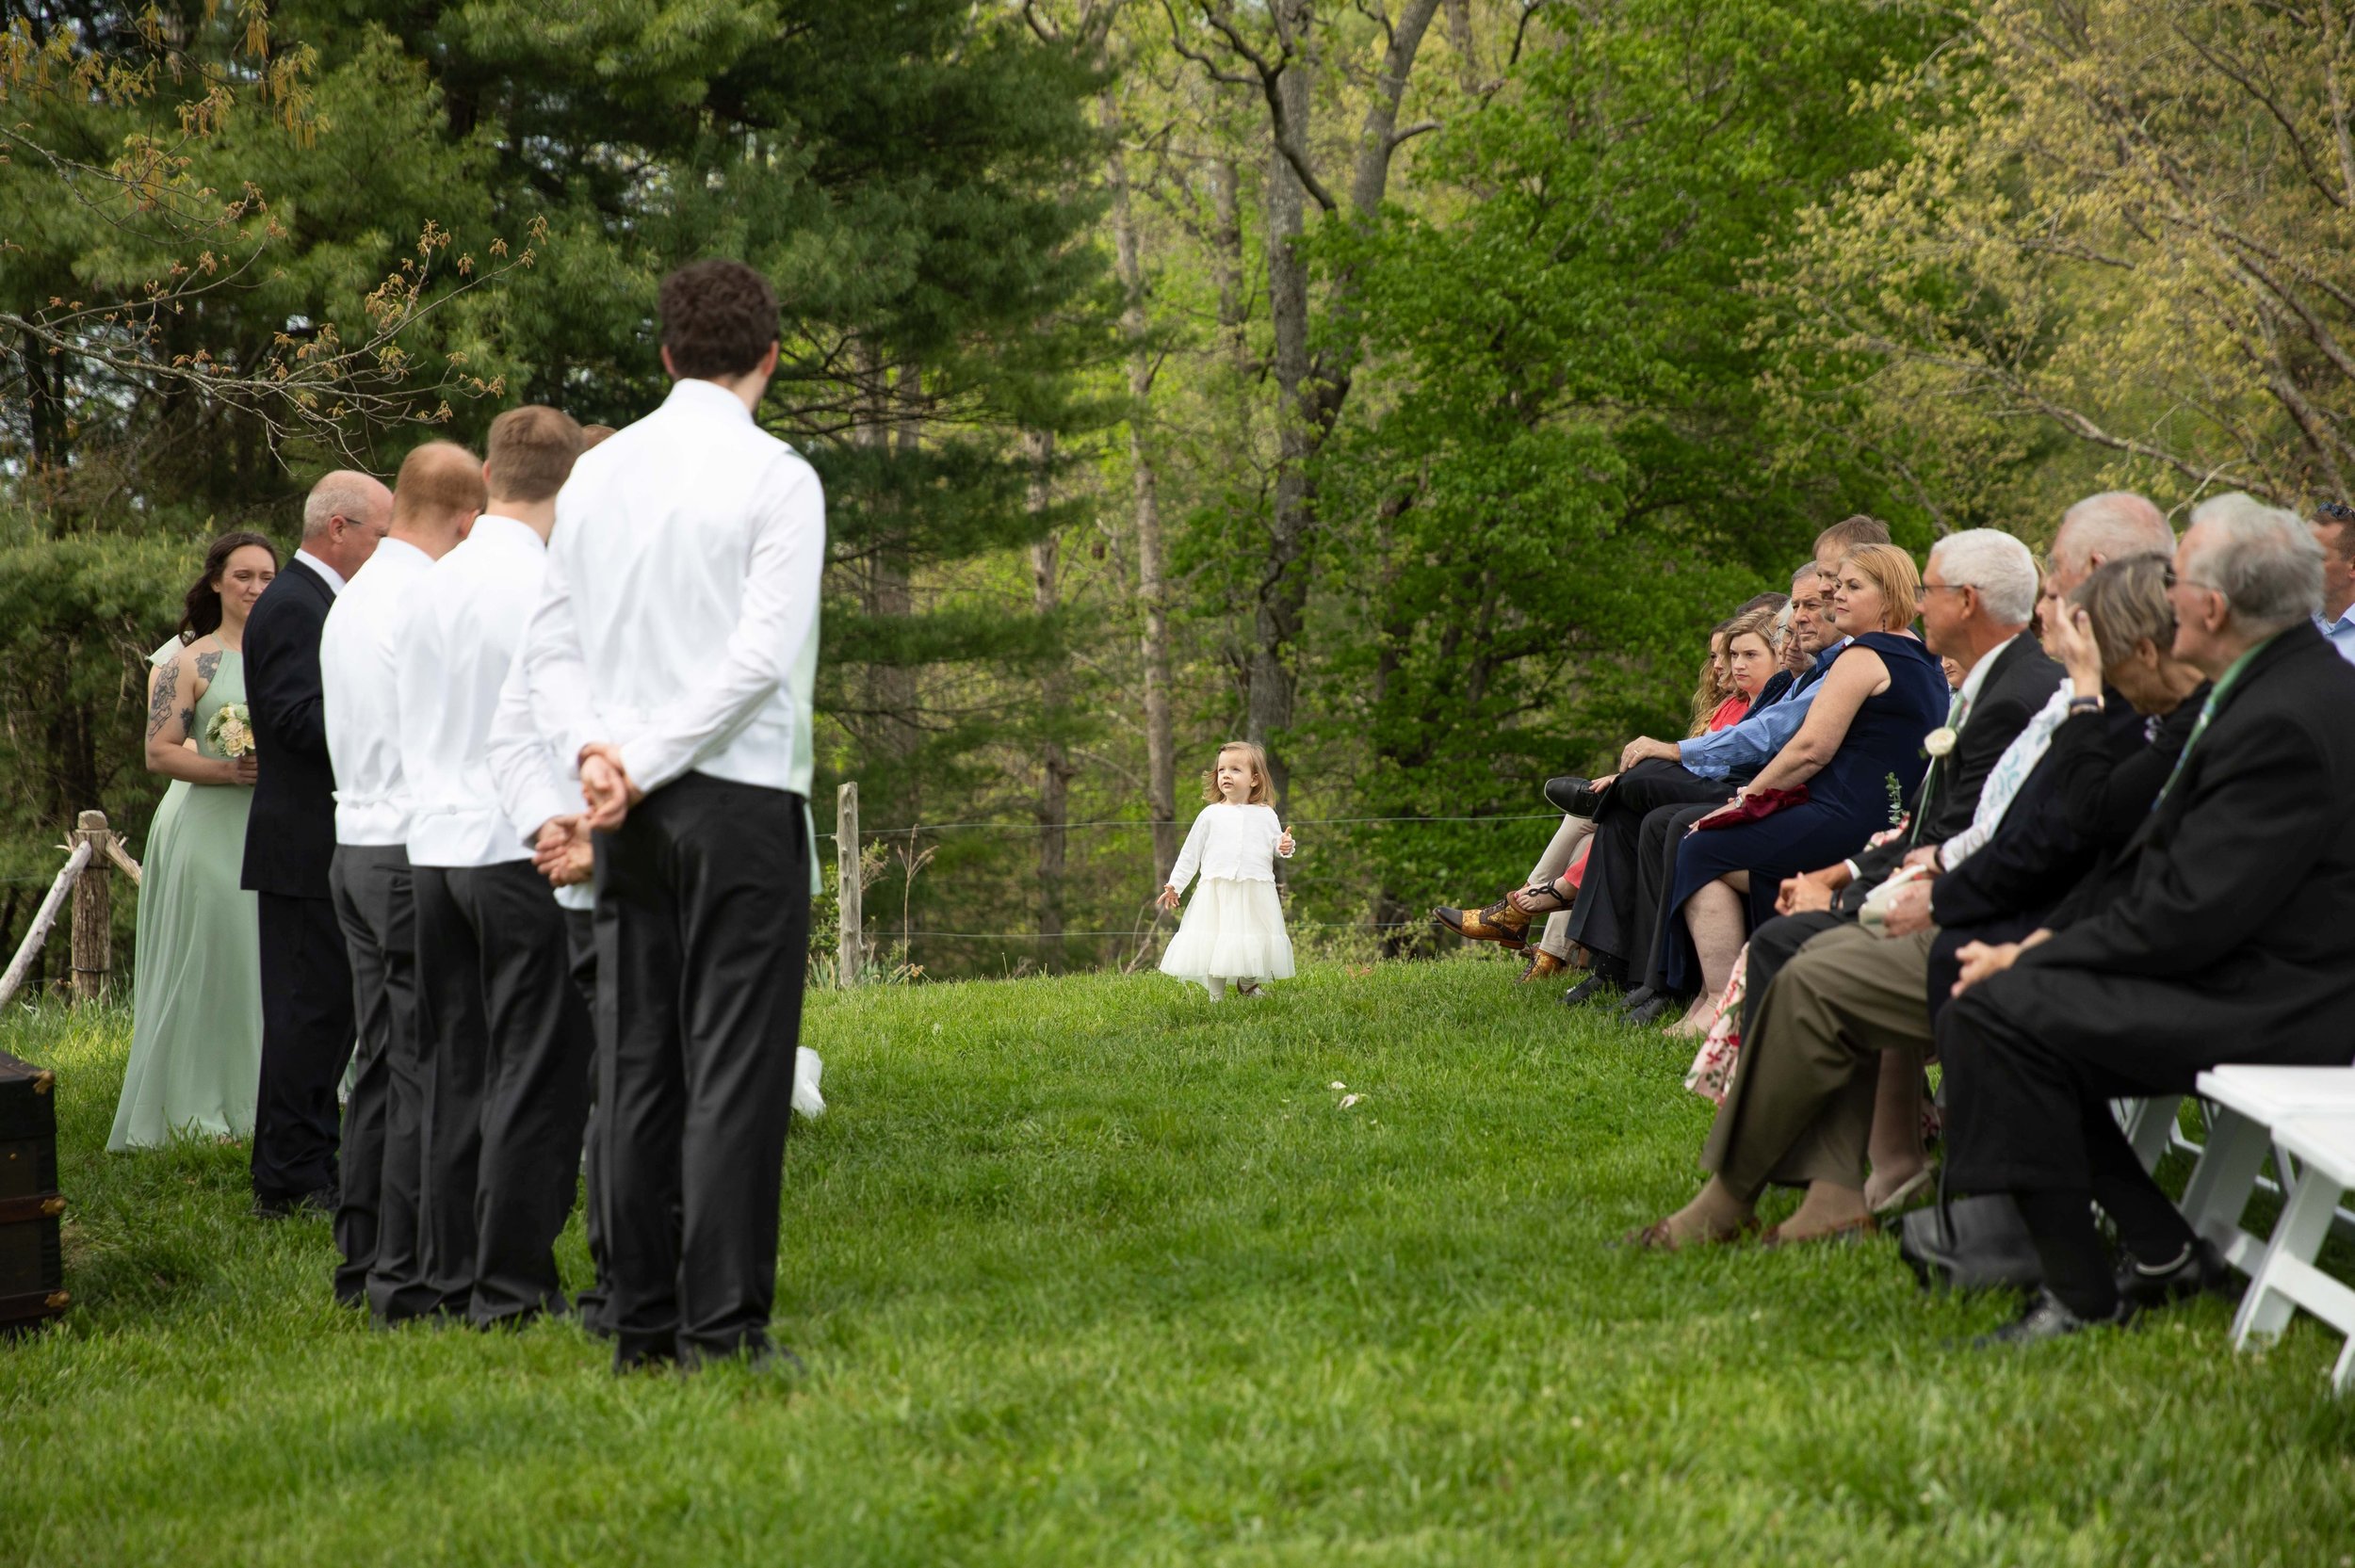 Outdoor April Wedding in Asheville North Carolina at Emerald Ridge Farm & Event Center blog 1 43.jpg